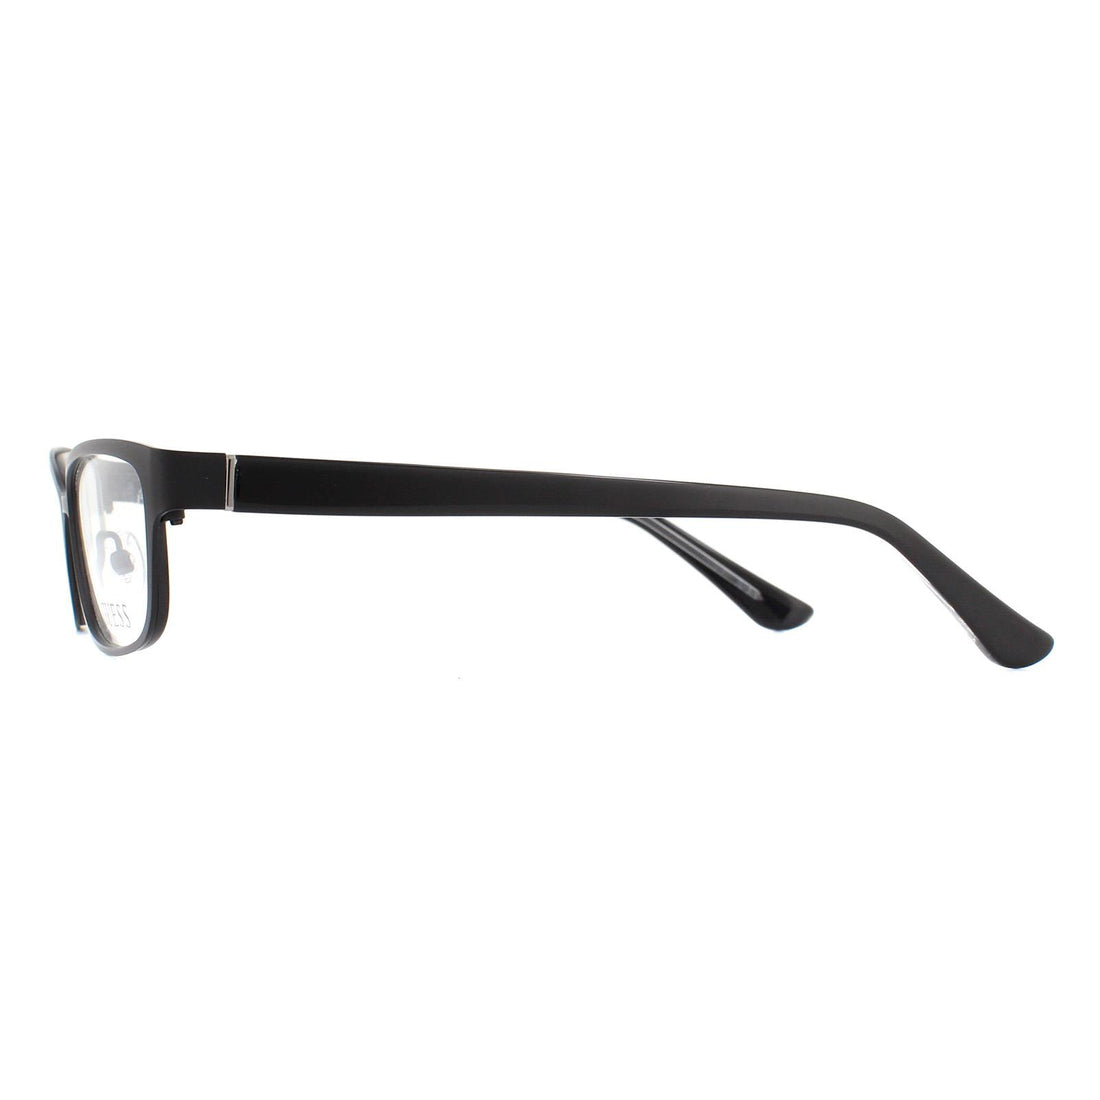 Guess Glasses Frames GU2515 002 Grey